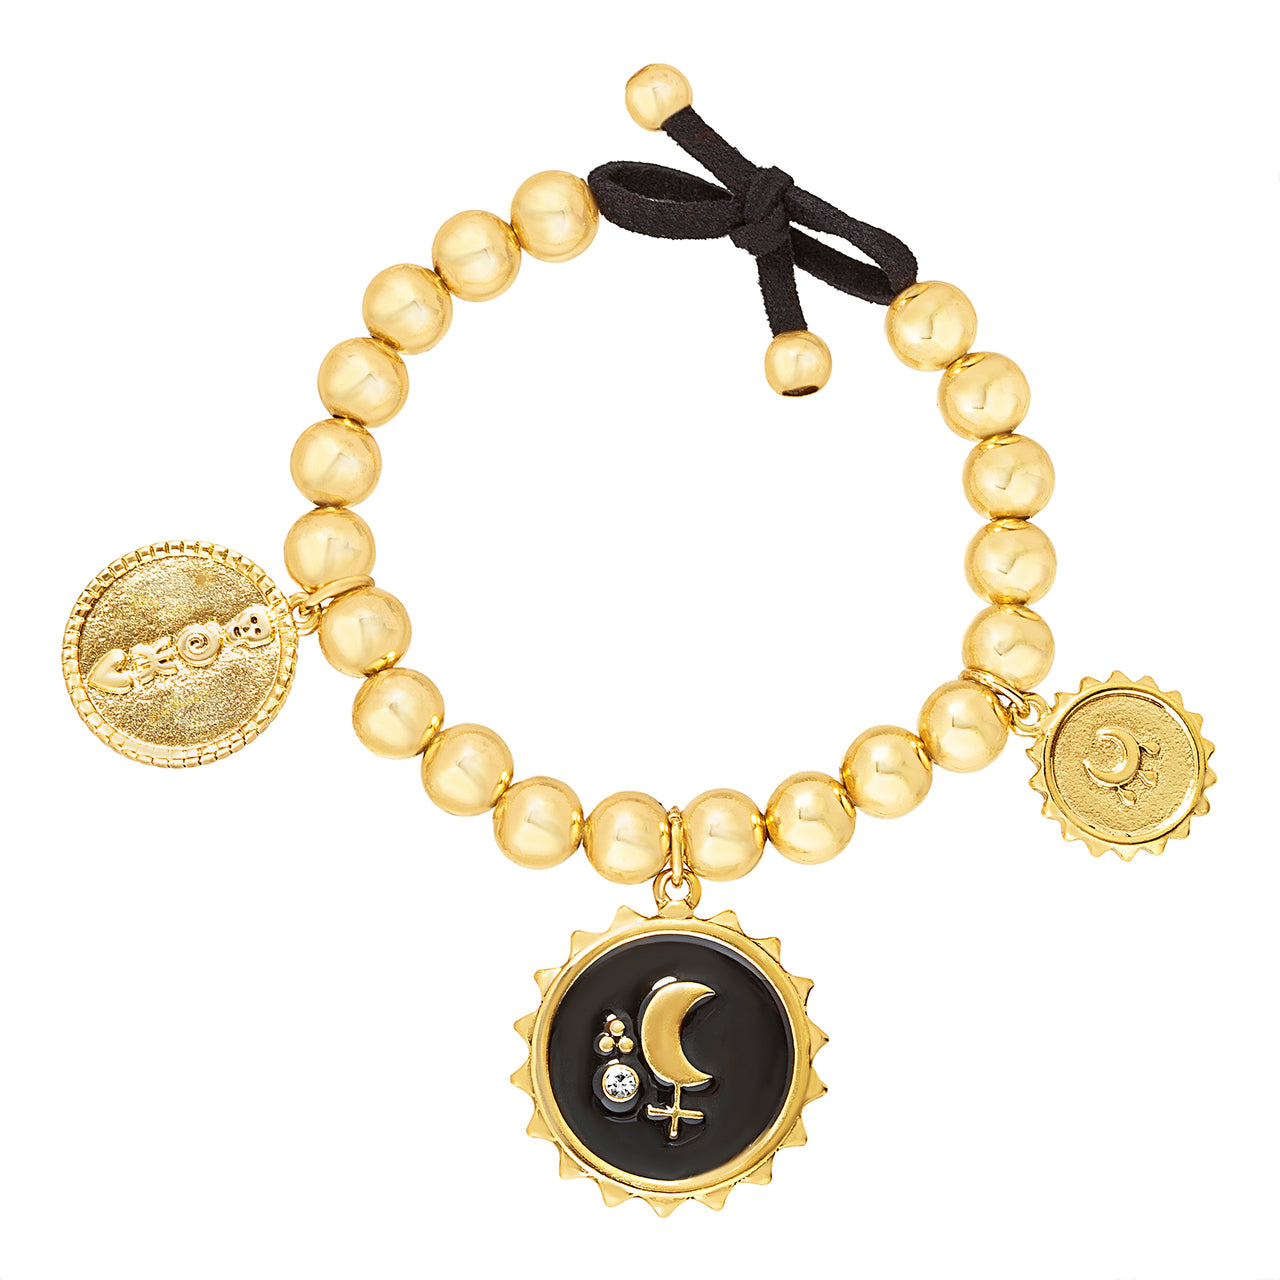 Steve Madden Yellow Gold Tone Beaded Bracelet with Black Moon Charm for Women